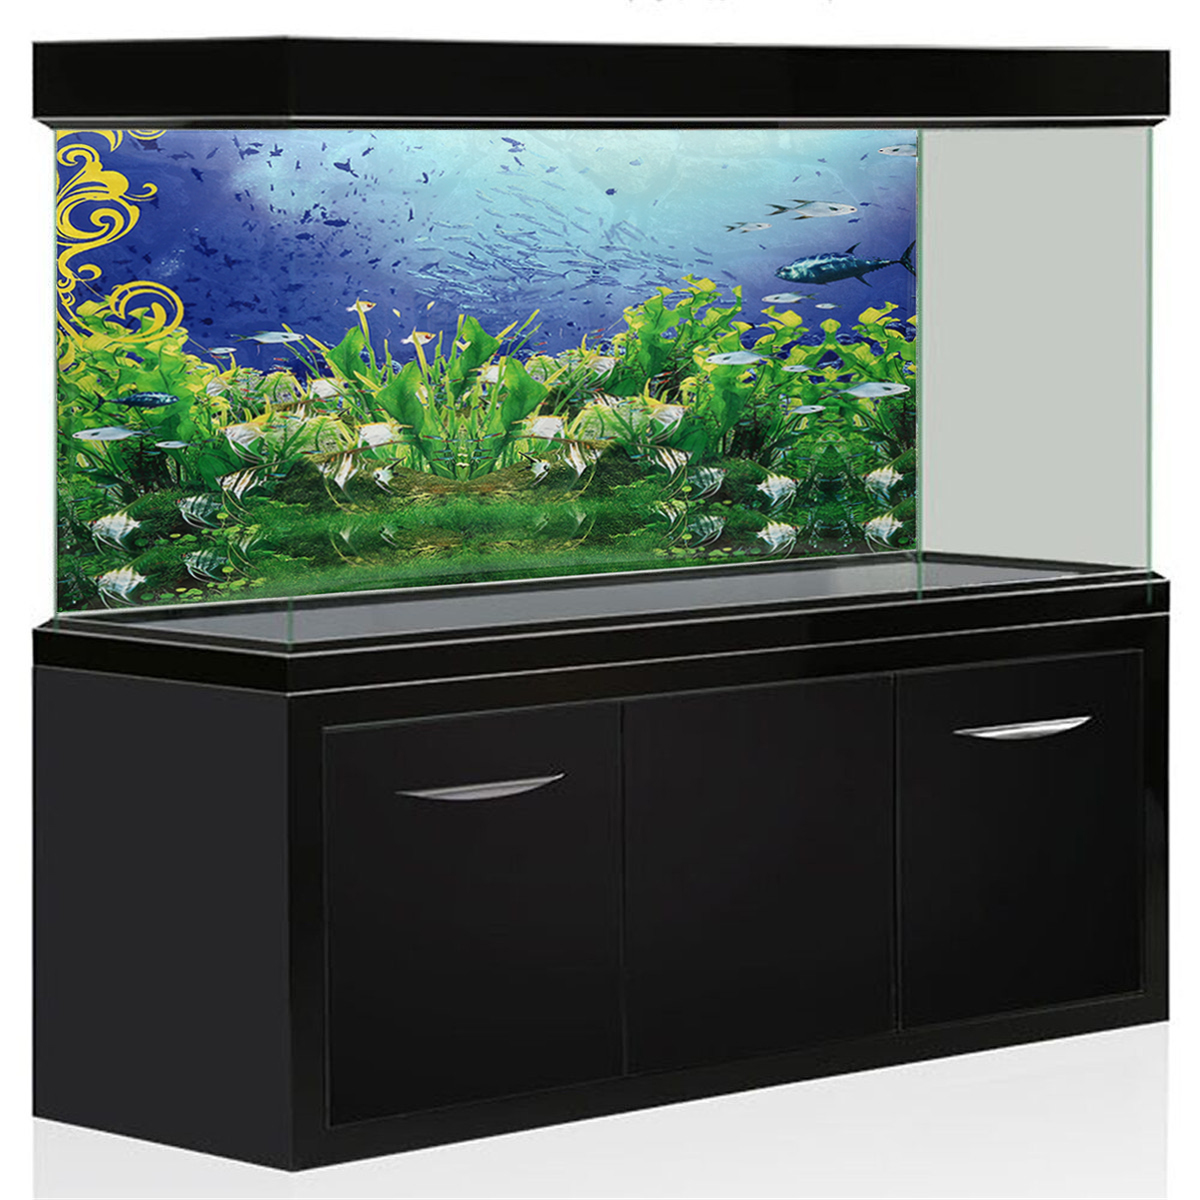 

HD Self Adhesive PVC Aquarium Background Poster Fish Tank Landscaping Backdrop